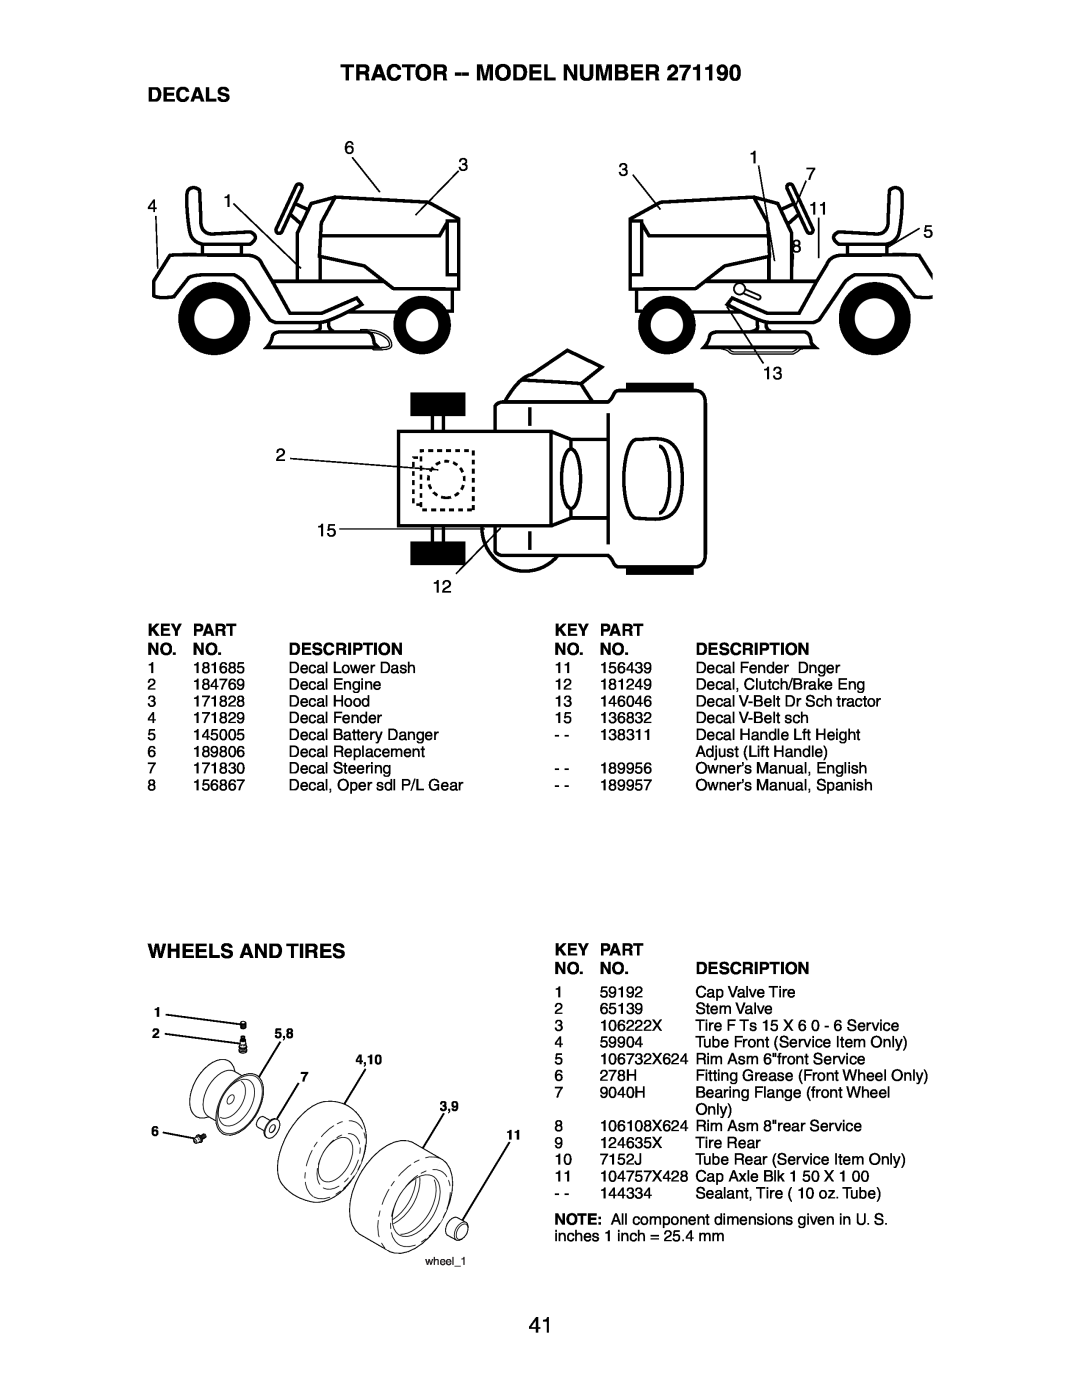 Poulan 189956, 271190 manual Decals, Wheels And Tires, Key Part, Description 